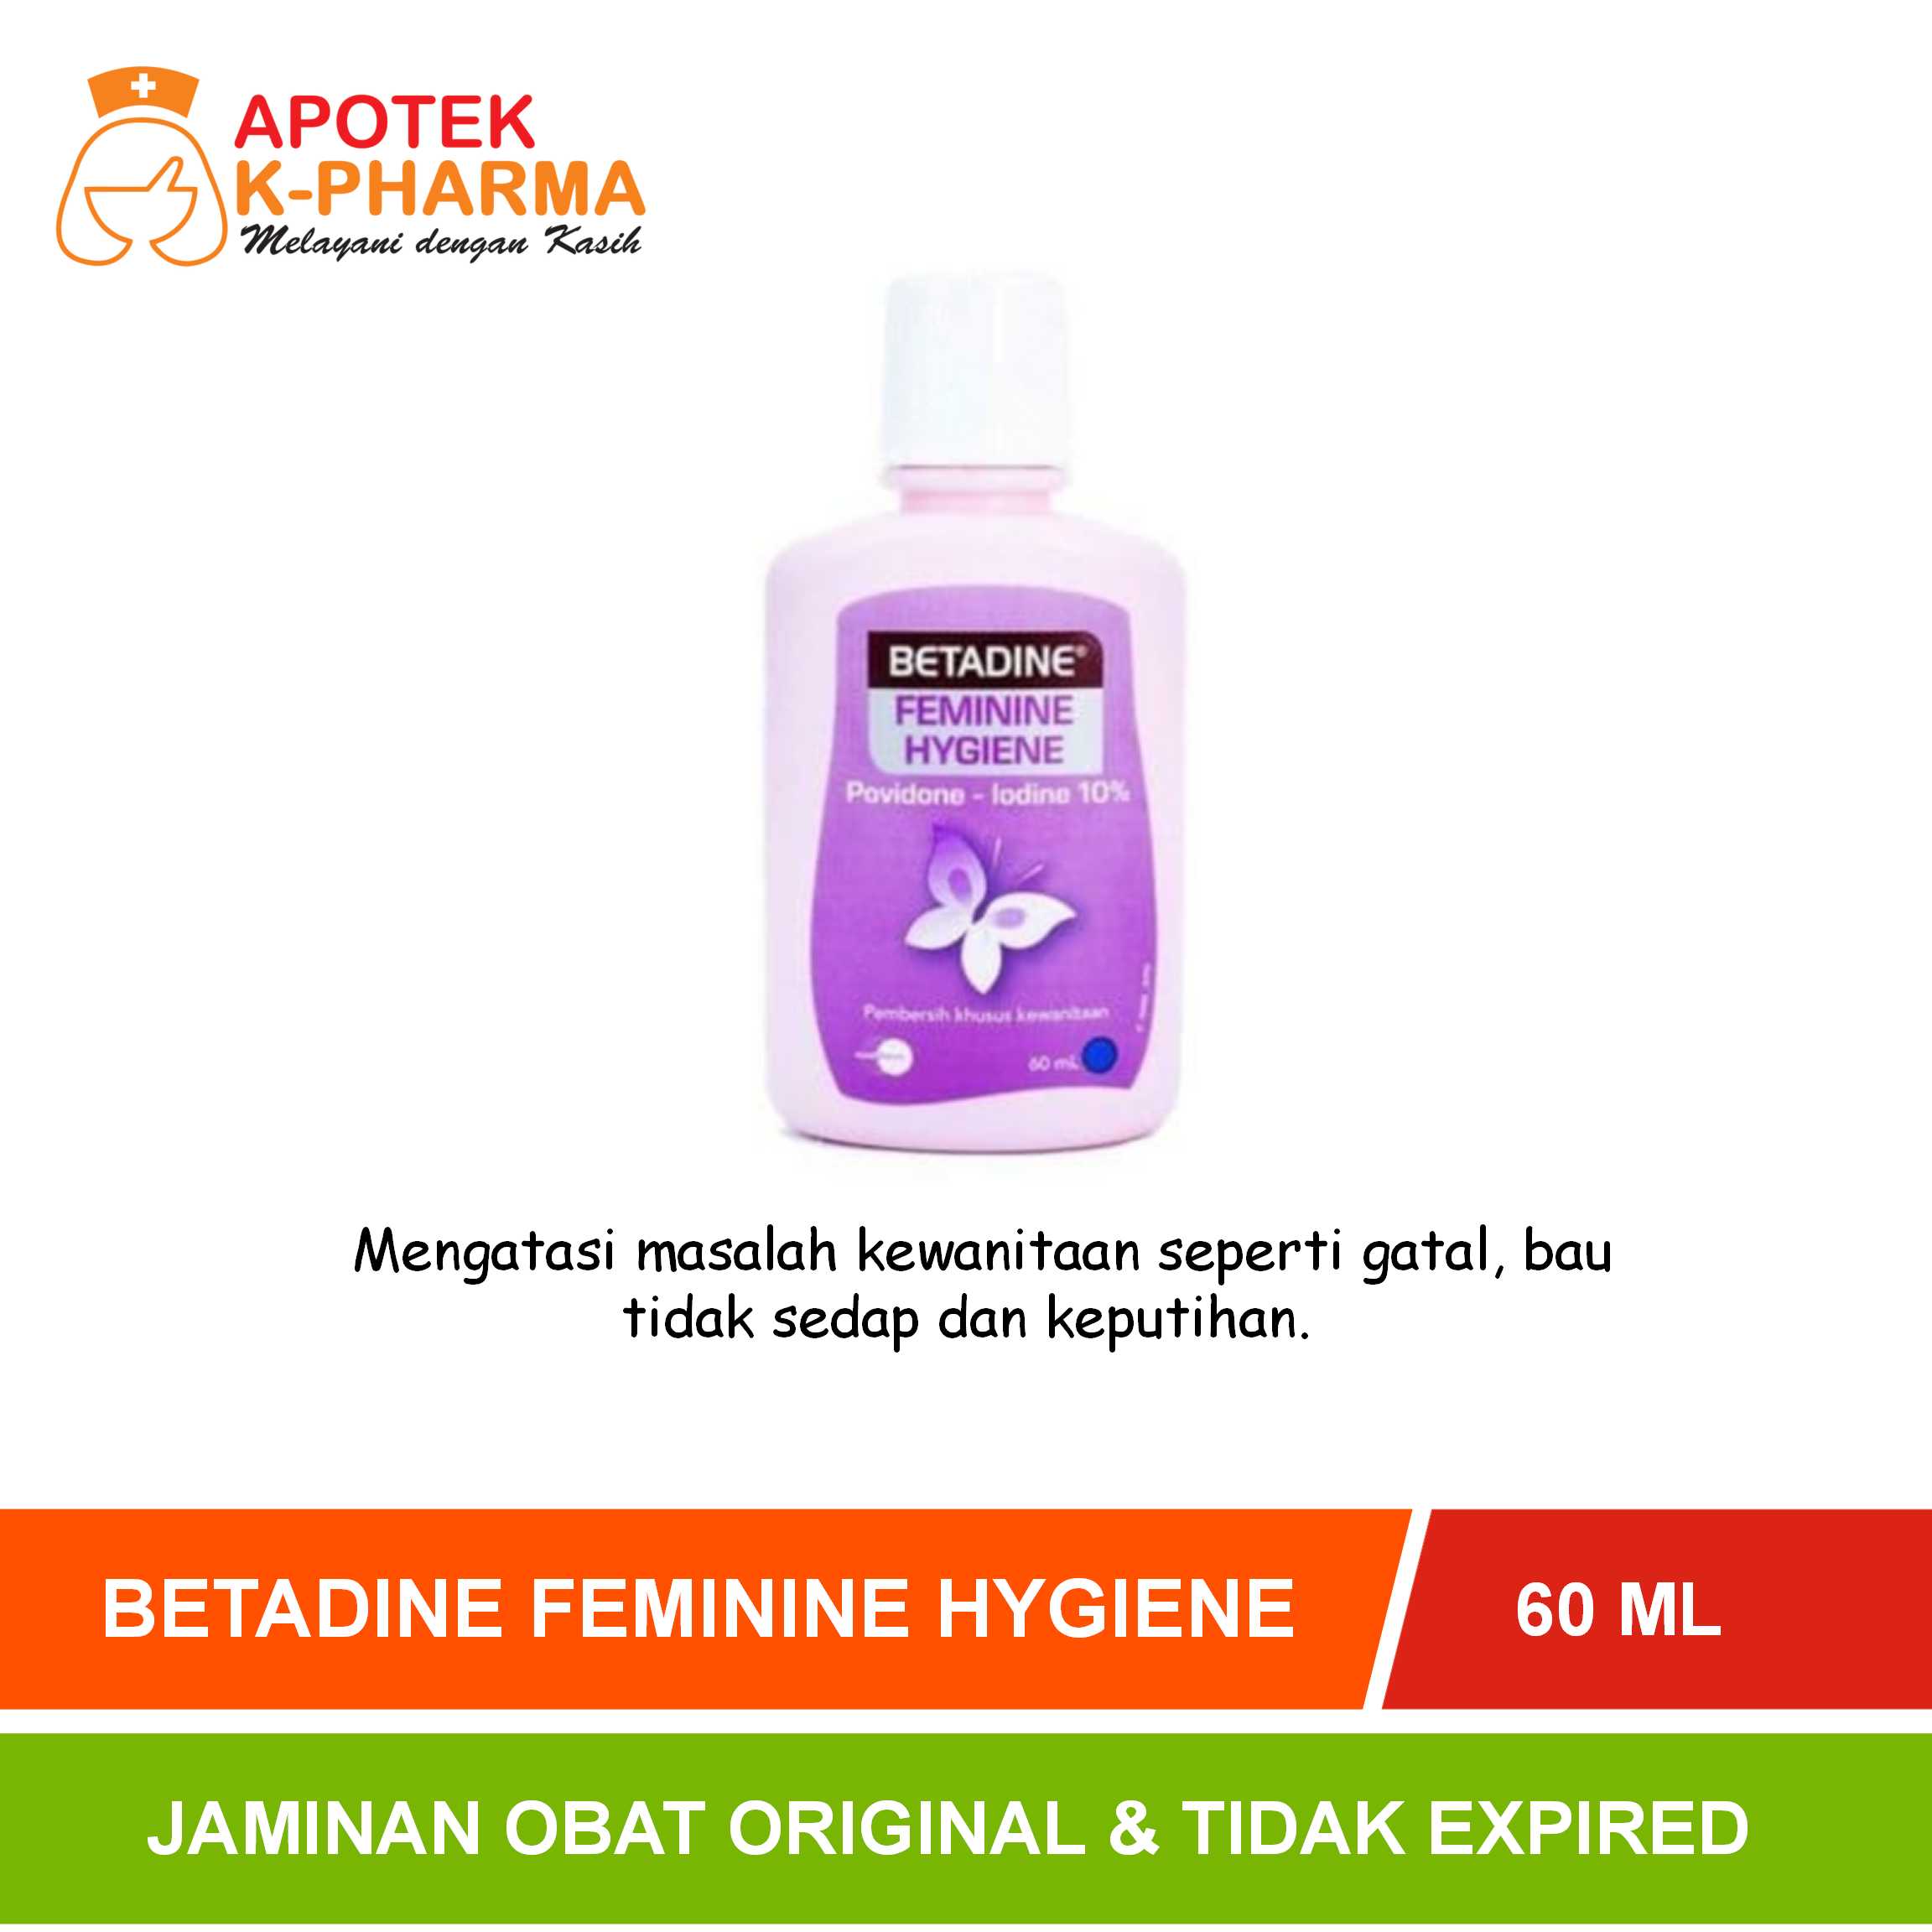 Betadine feminine hygiene untuk gatal